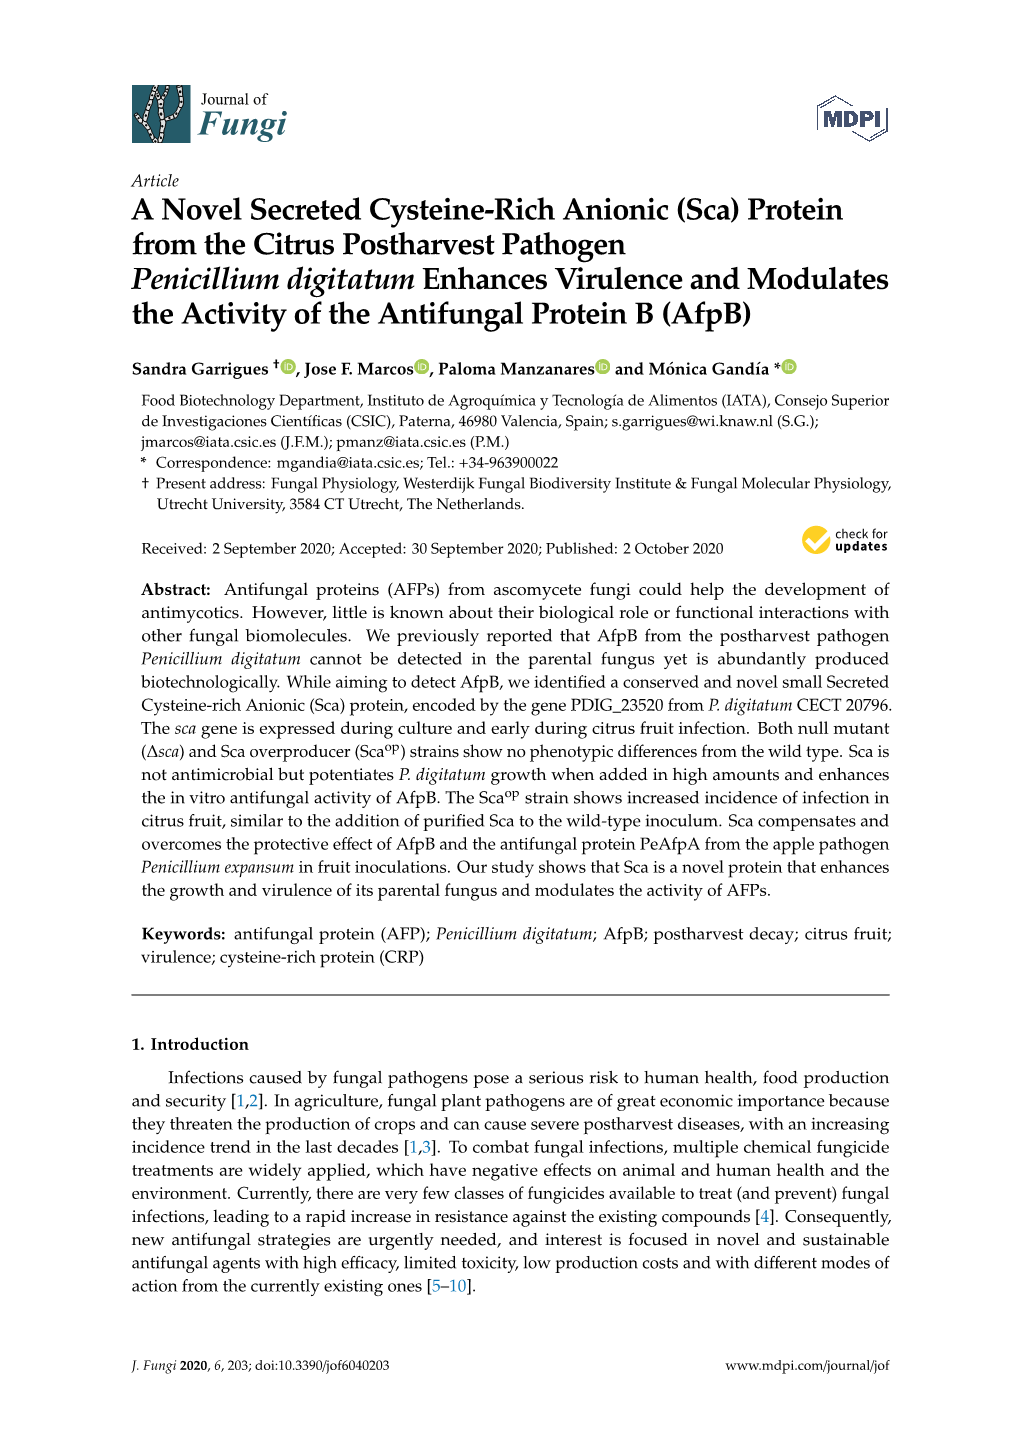 Protein from the Citrus Postharvest Pathogen Penicillium Digitatum Enhances Virulence and Modulates the Activity of the Antifungal Protein B (Afpb)